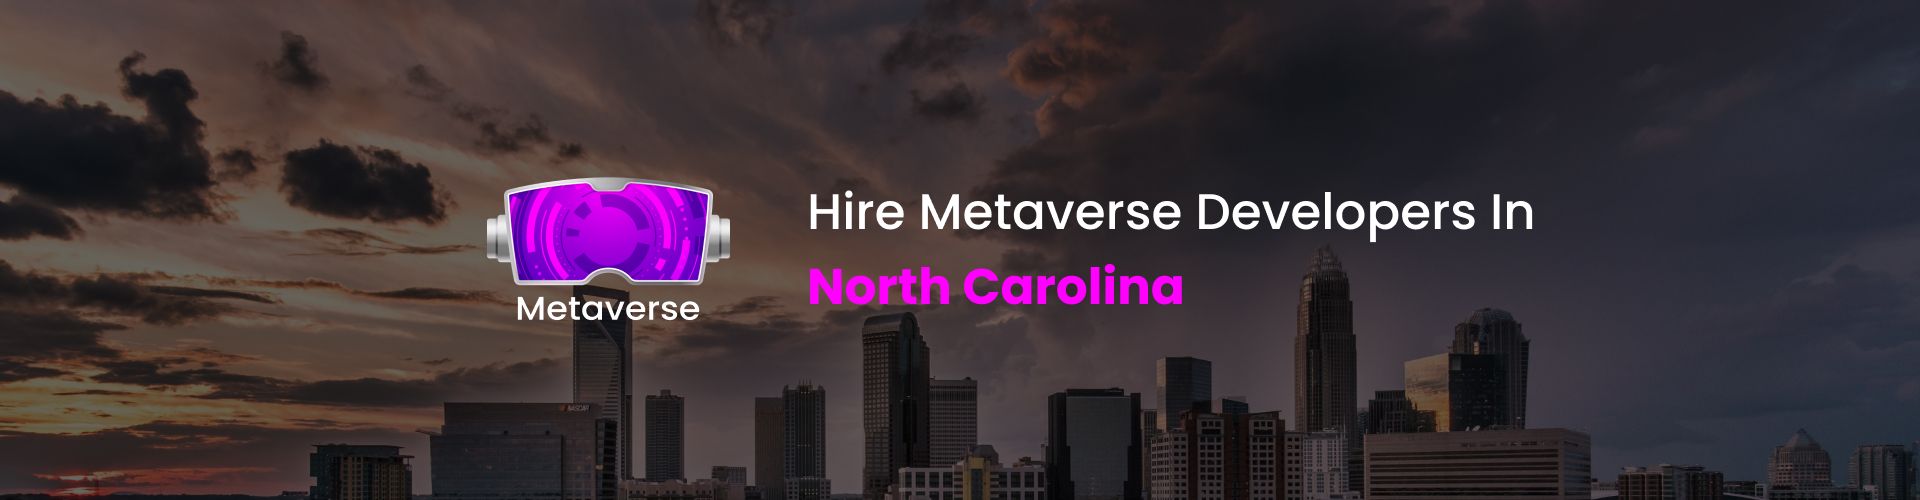 hire metaverse developers in north carolina